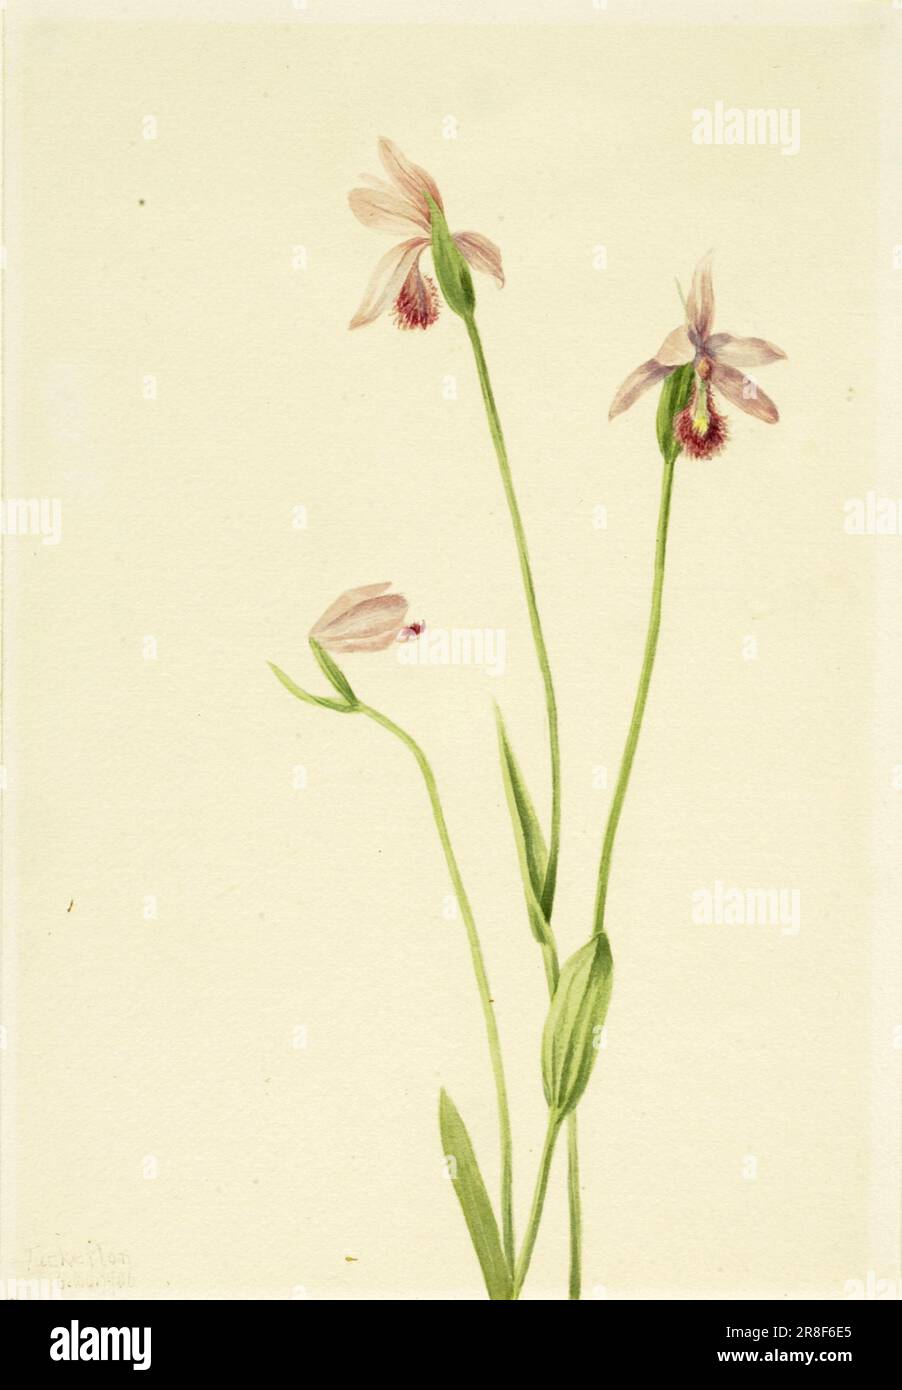 Rose Pogonia (Pogonia ophioglossoides) 1906 by Mary Vaux Walcott, born Philadelphia, PA 1860-died St. Andrews, New Brunswick, Canada 1940 Stock Photo